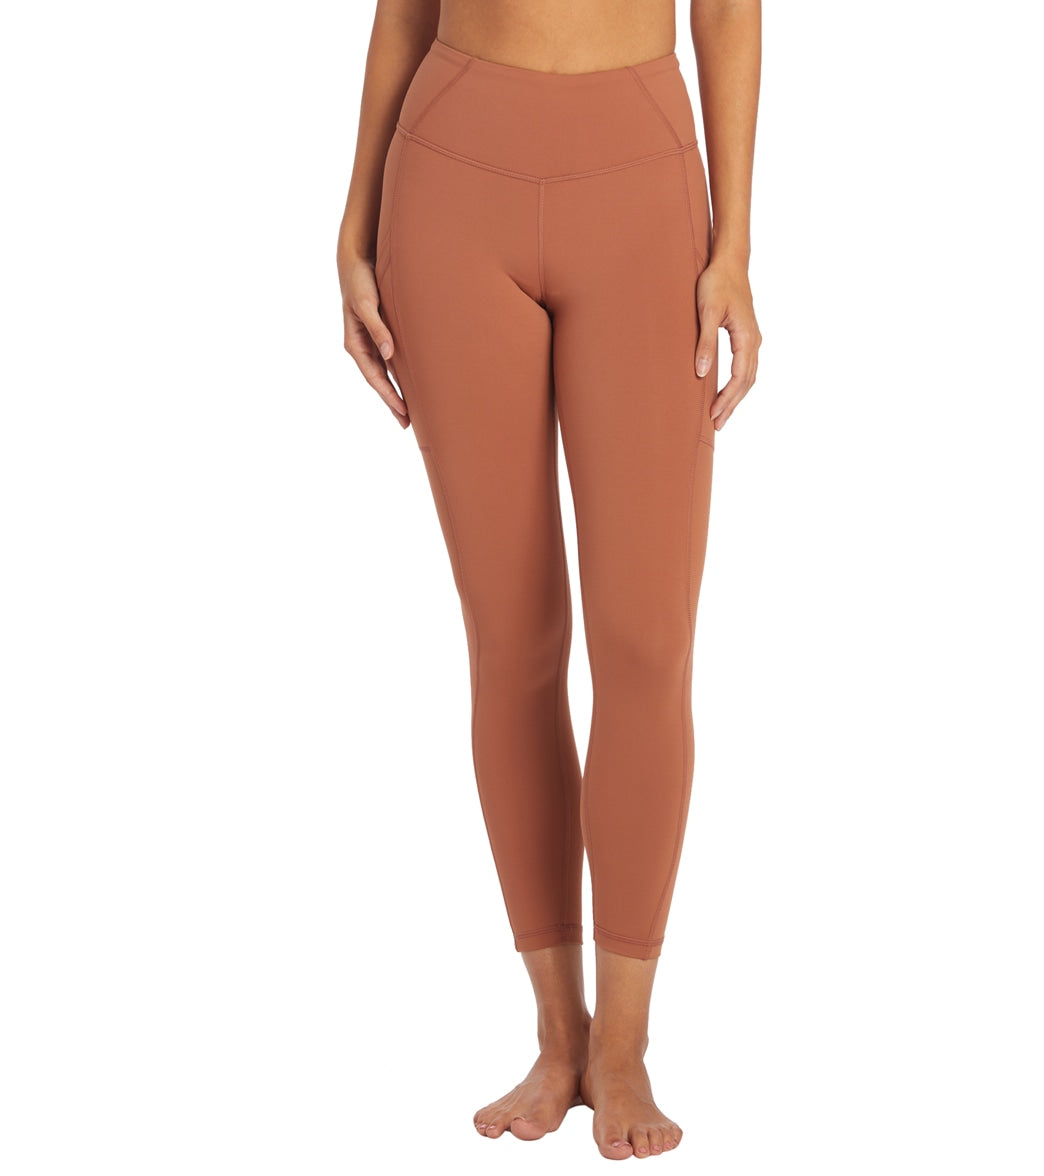 HSMQHJWE Yoga Pants Long Length for Women Women's Printing Bubble